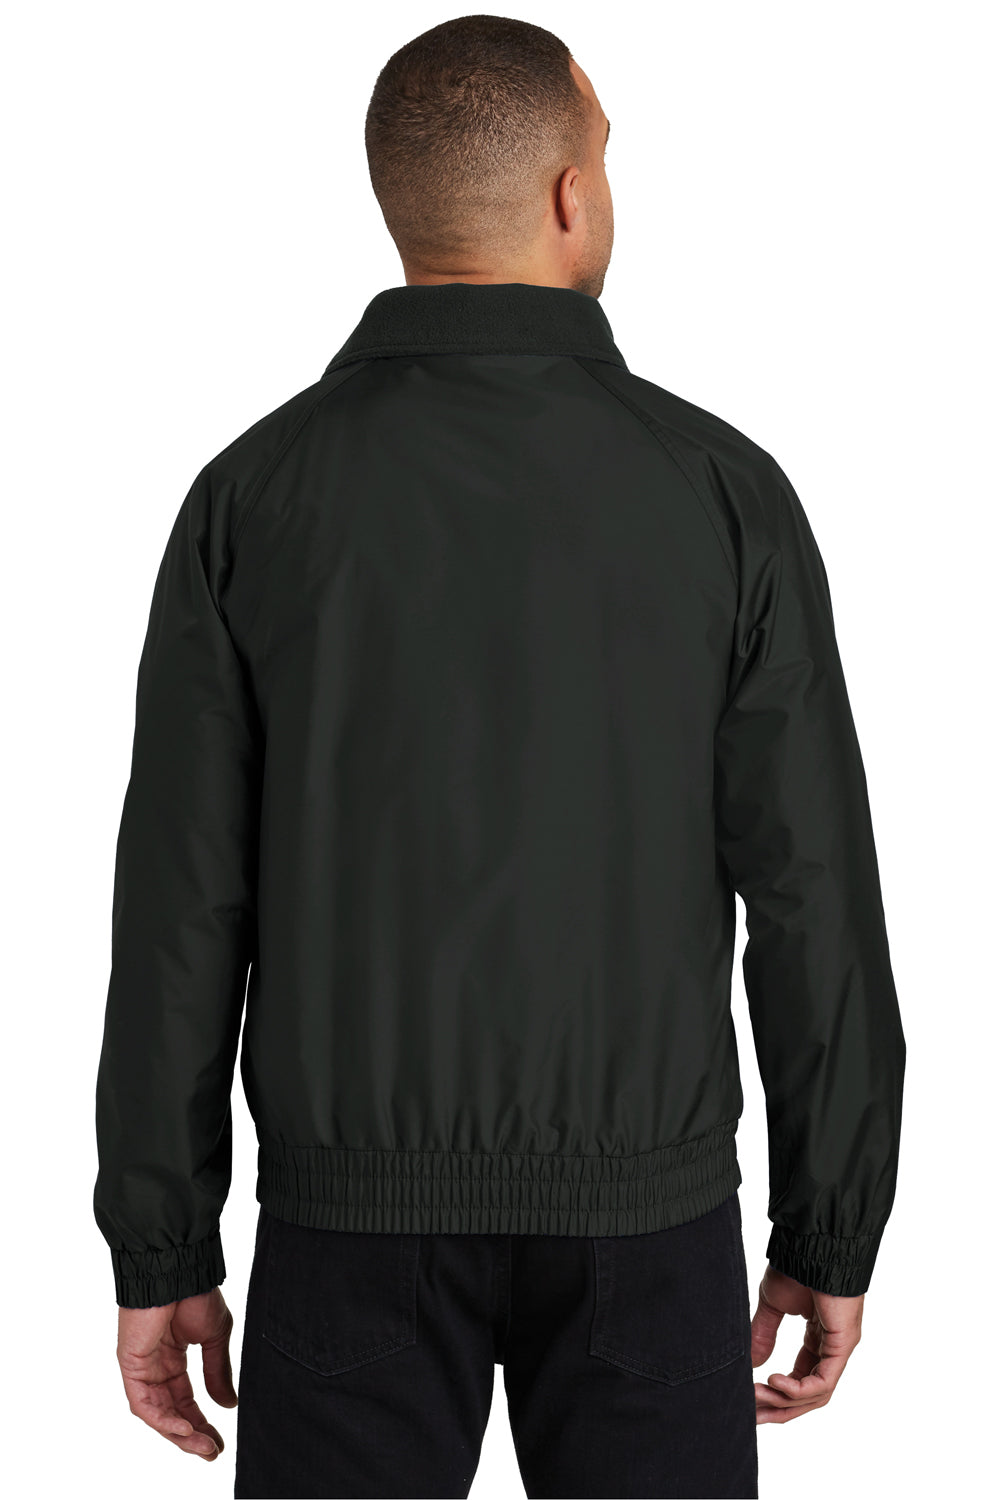 Port Authority JP54 Mens Competitor Wind & Water Resistant Full Zip Jacket Black Back